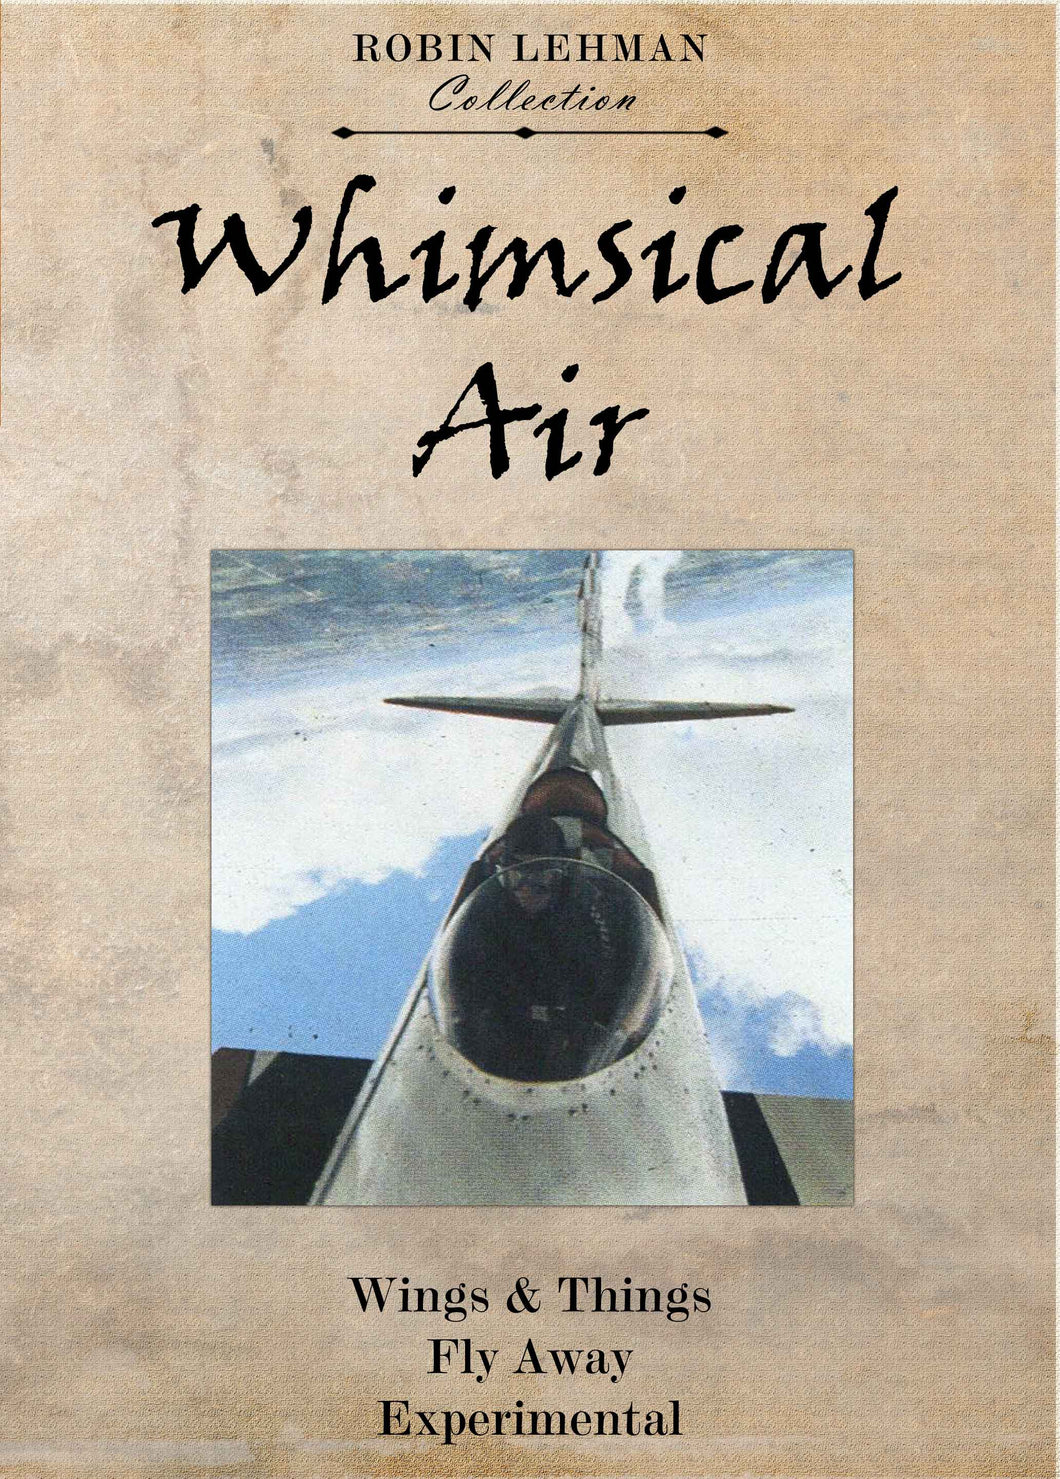 Robin Lehman's Whimsical Air